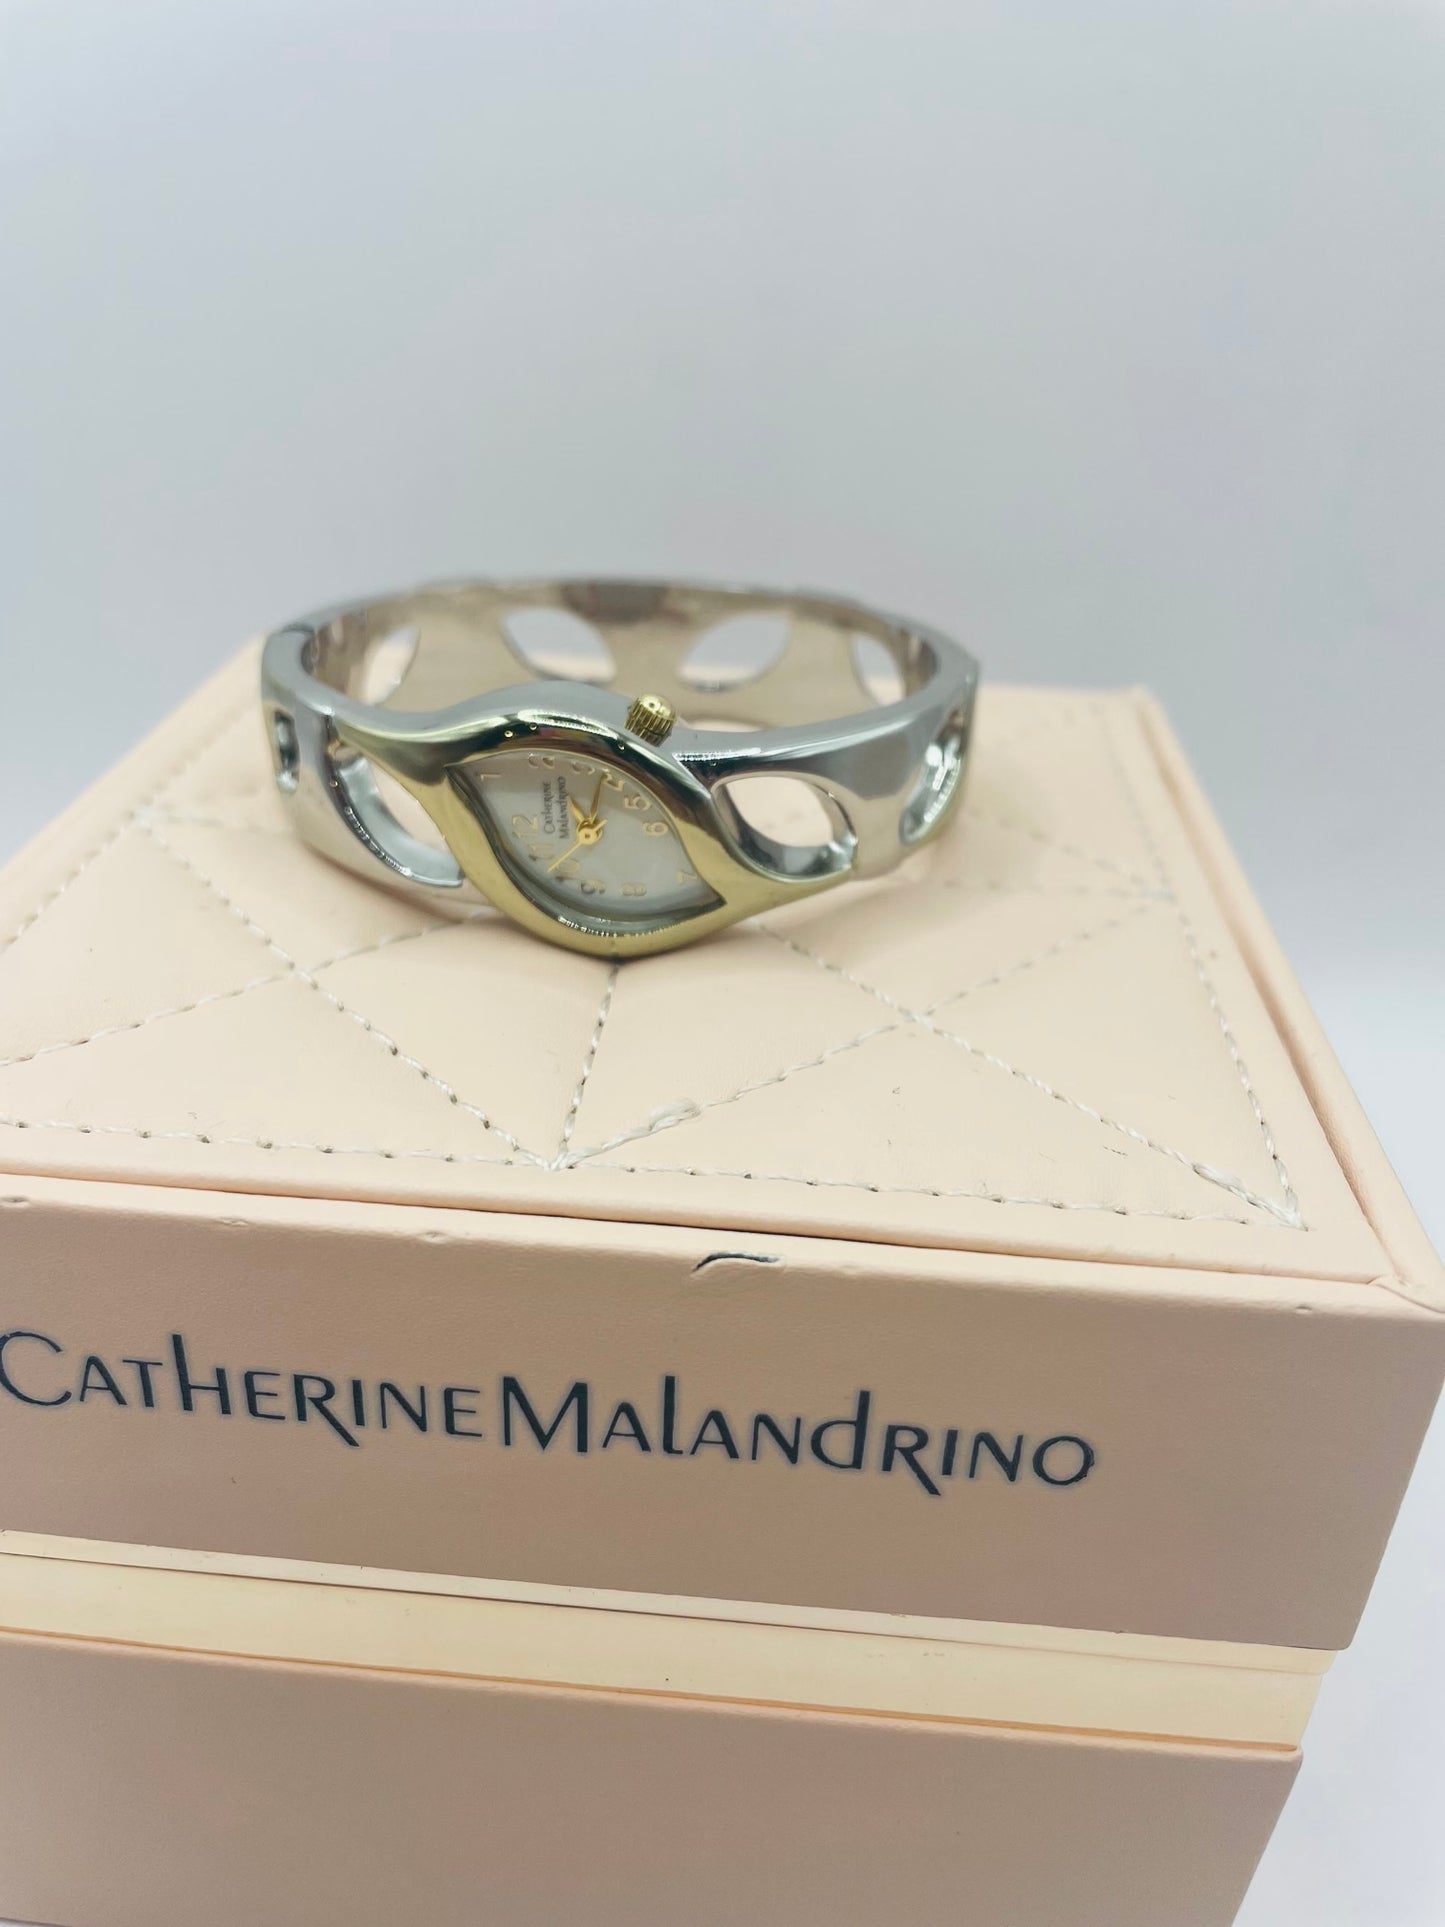 Catherine malandrino watch